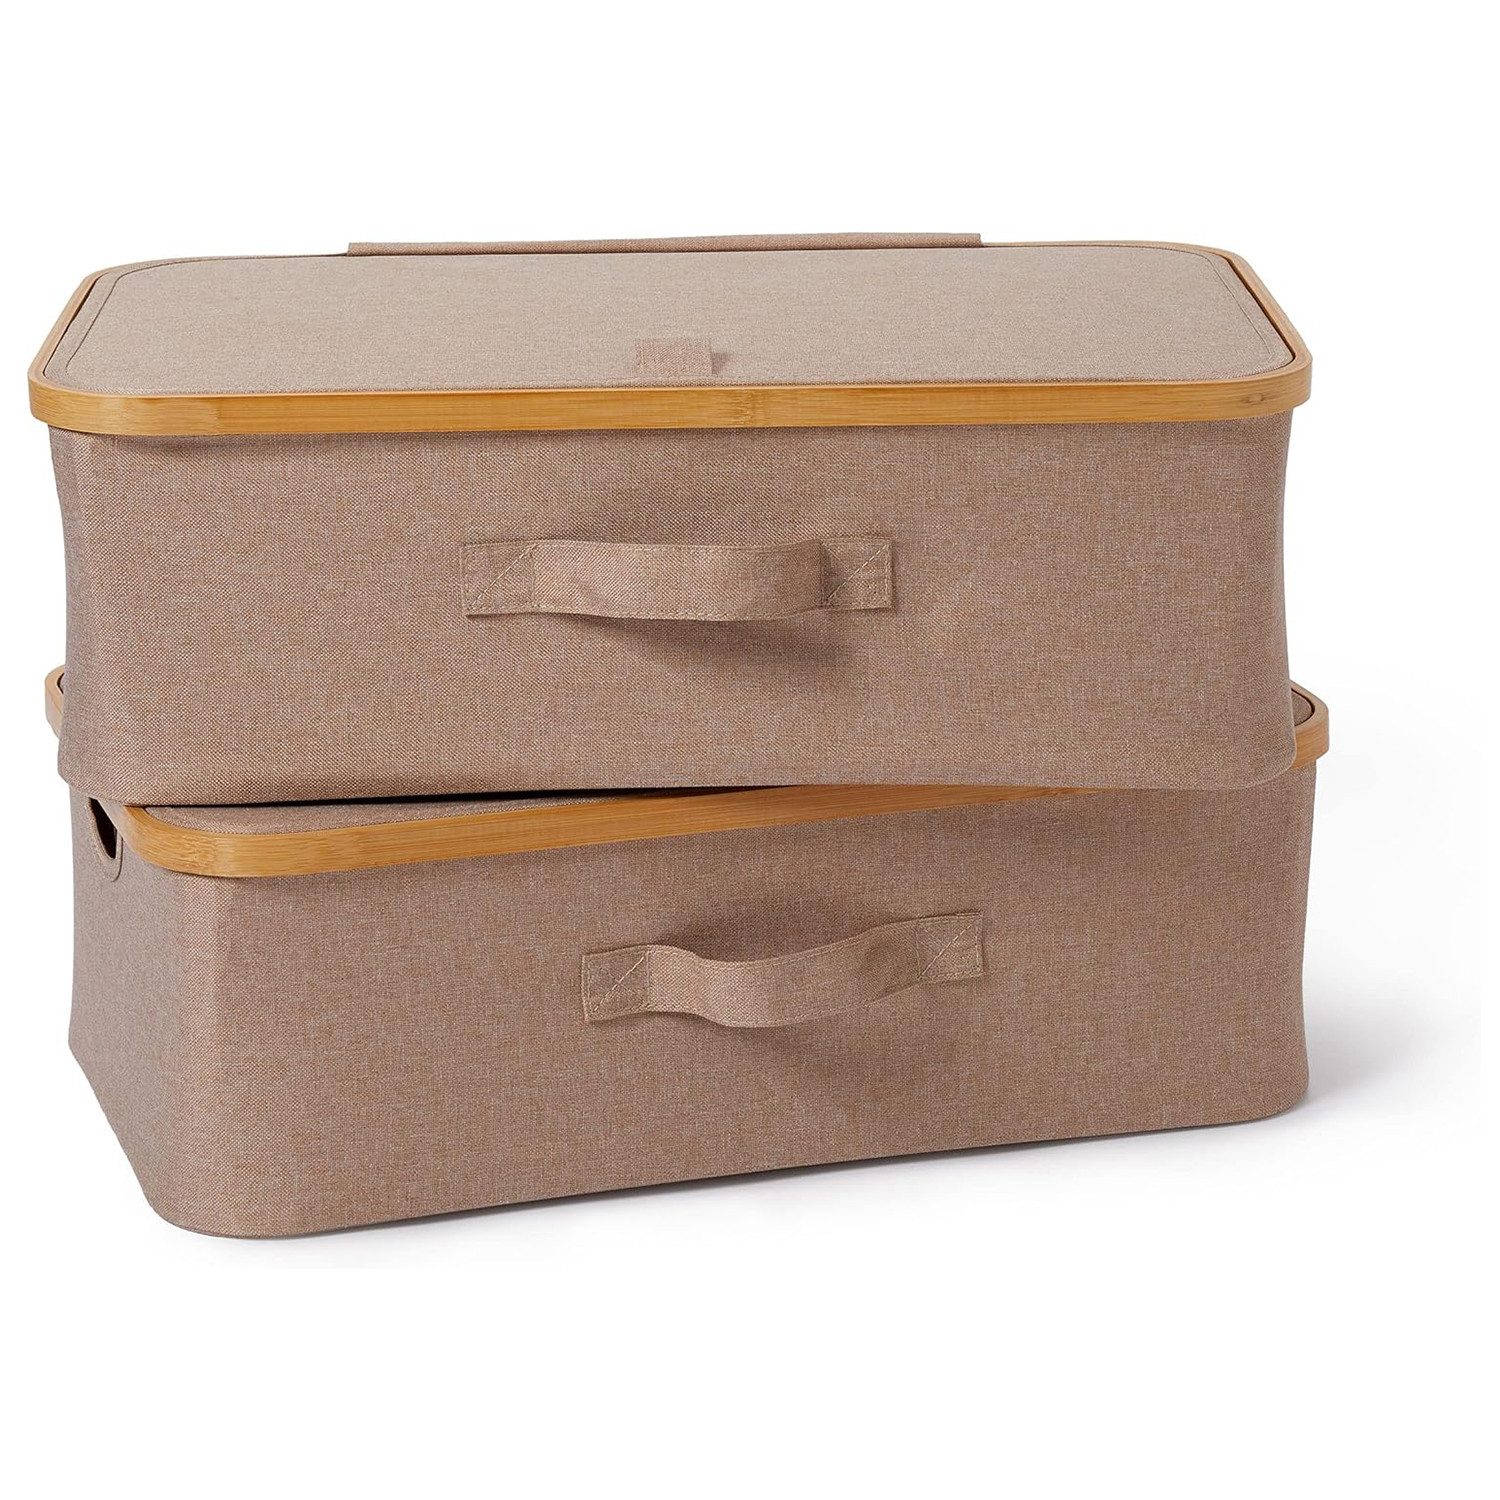 Lumaland Aufbewahrungsbox faltbares Unterbett Aufbewahrungsbox Organizer (Aufbewahrung von Unterwäsche etc), Bambus-Rahmen im 2er Set Maße 54 x 33 x 18 cm - Grau